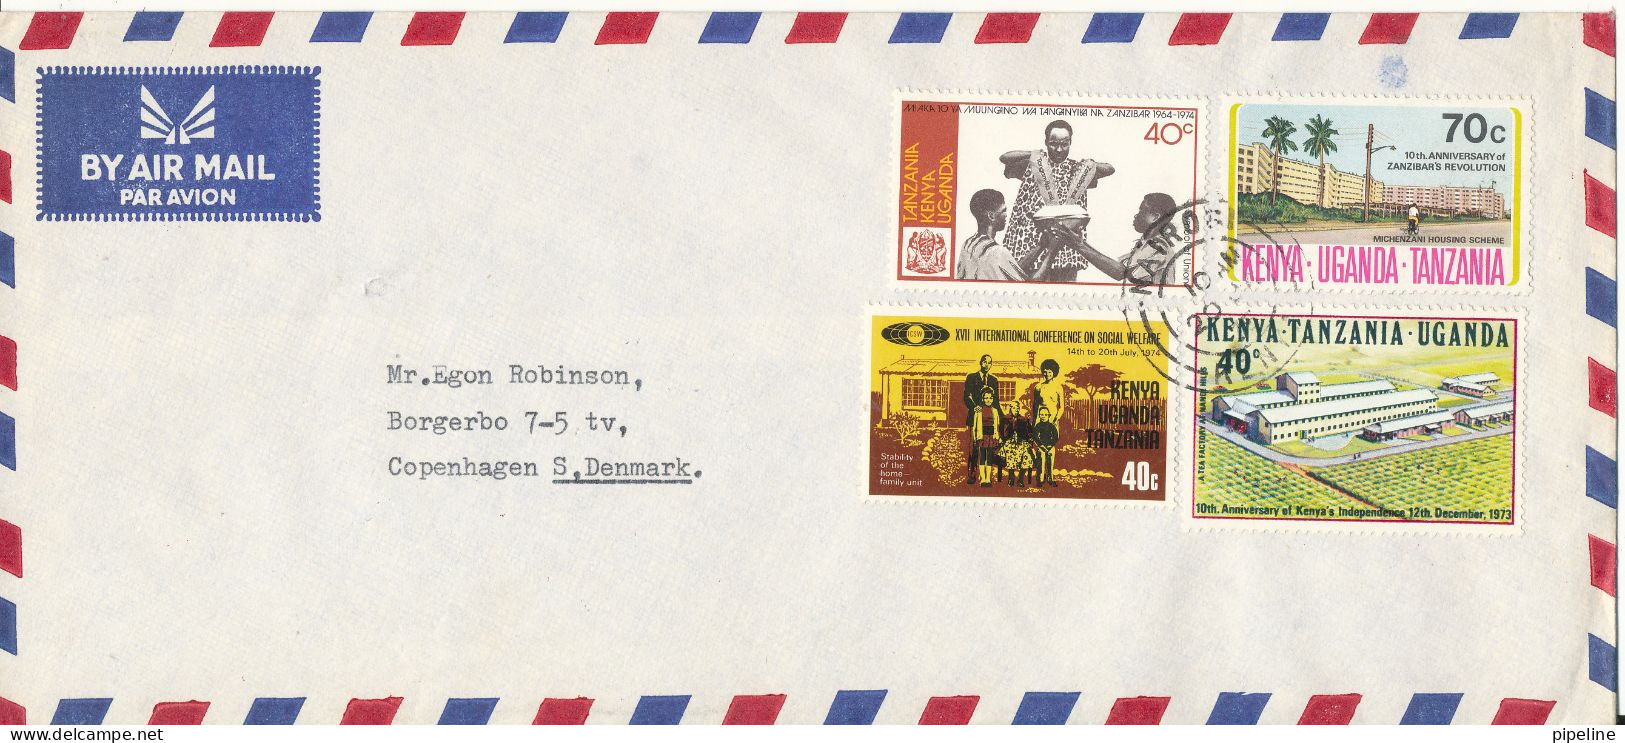 Kenya, Uganda & Tanzania Air Mail Cover Sent To Denmark 20-3-1975 ?? Very Nice Cover - Kenya, Uganda & Tanzania